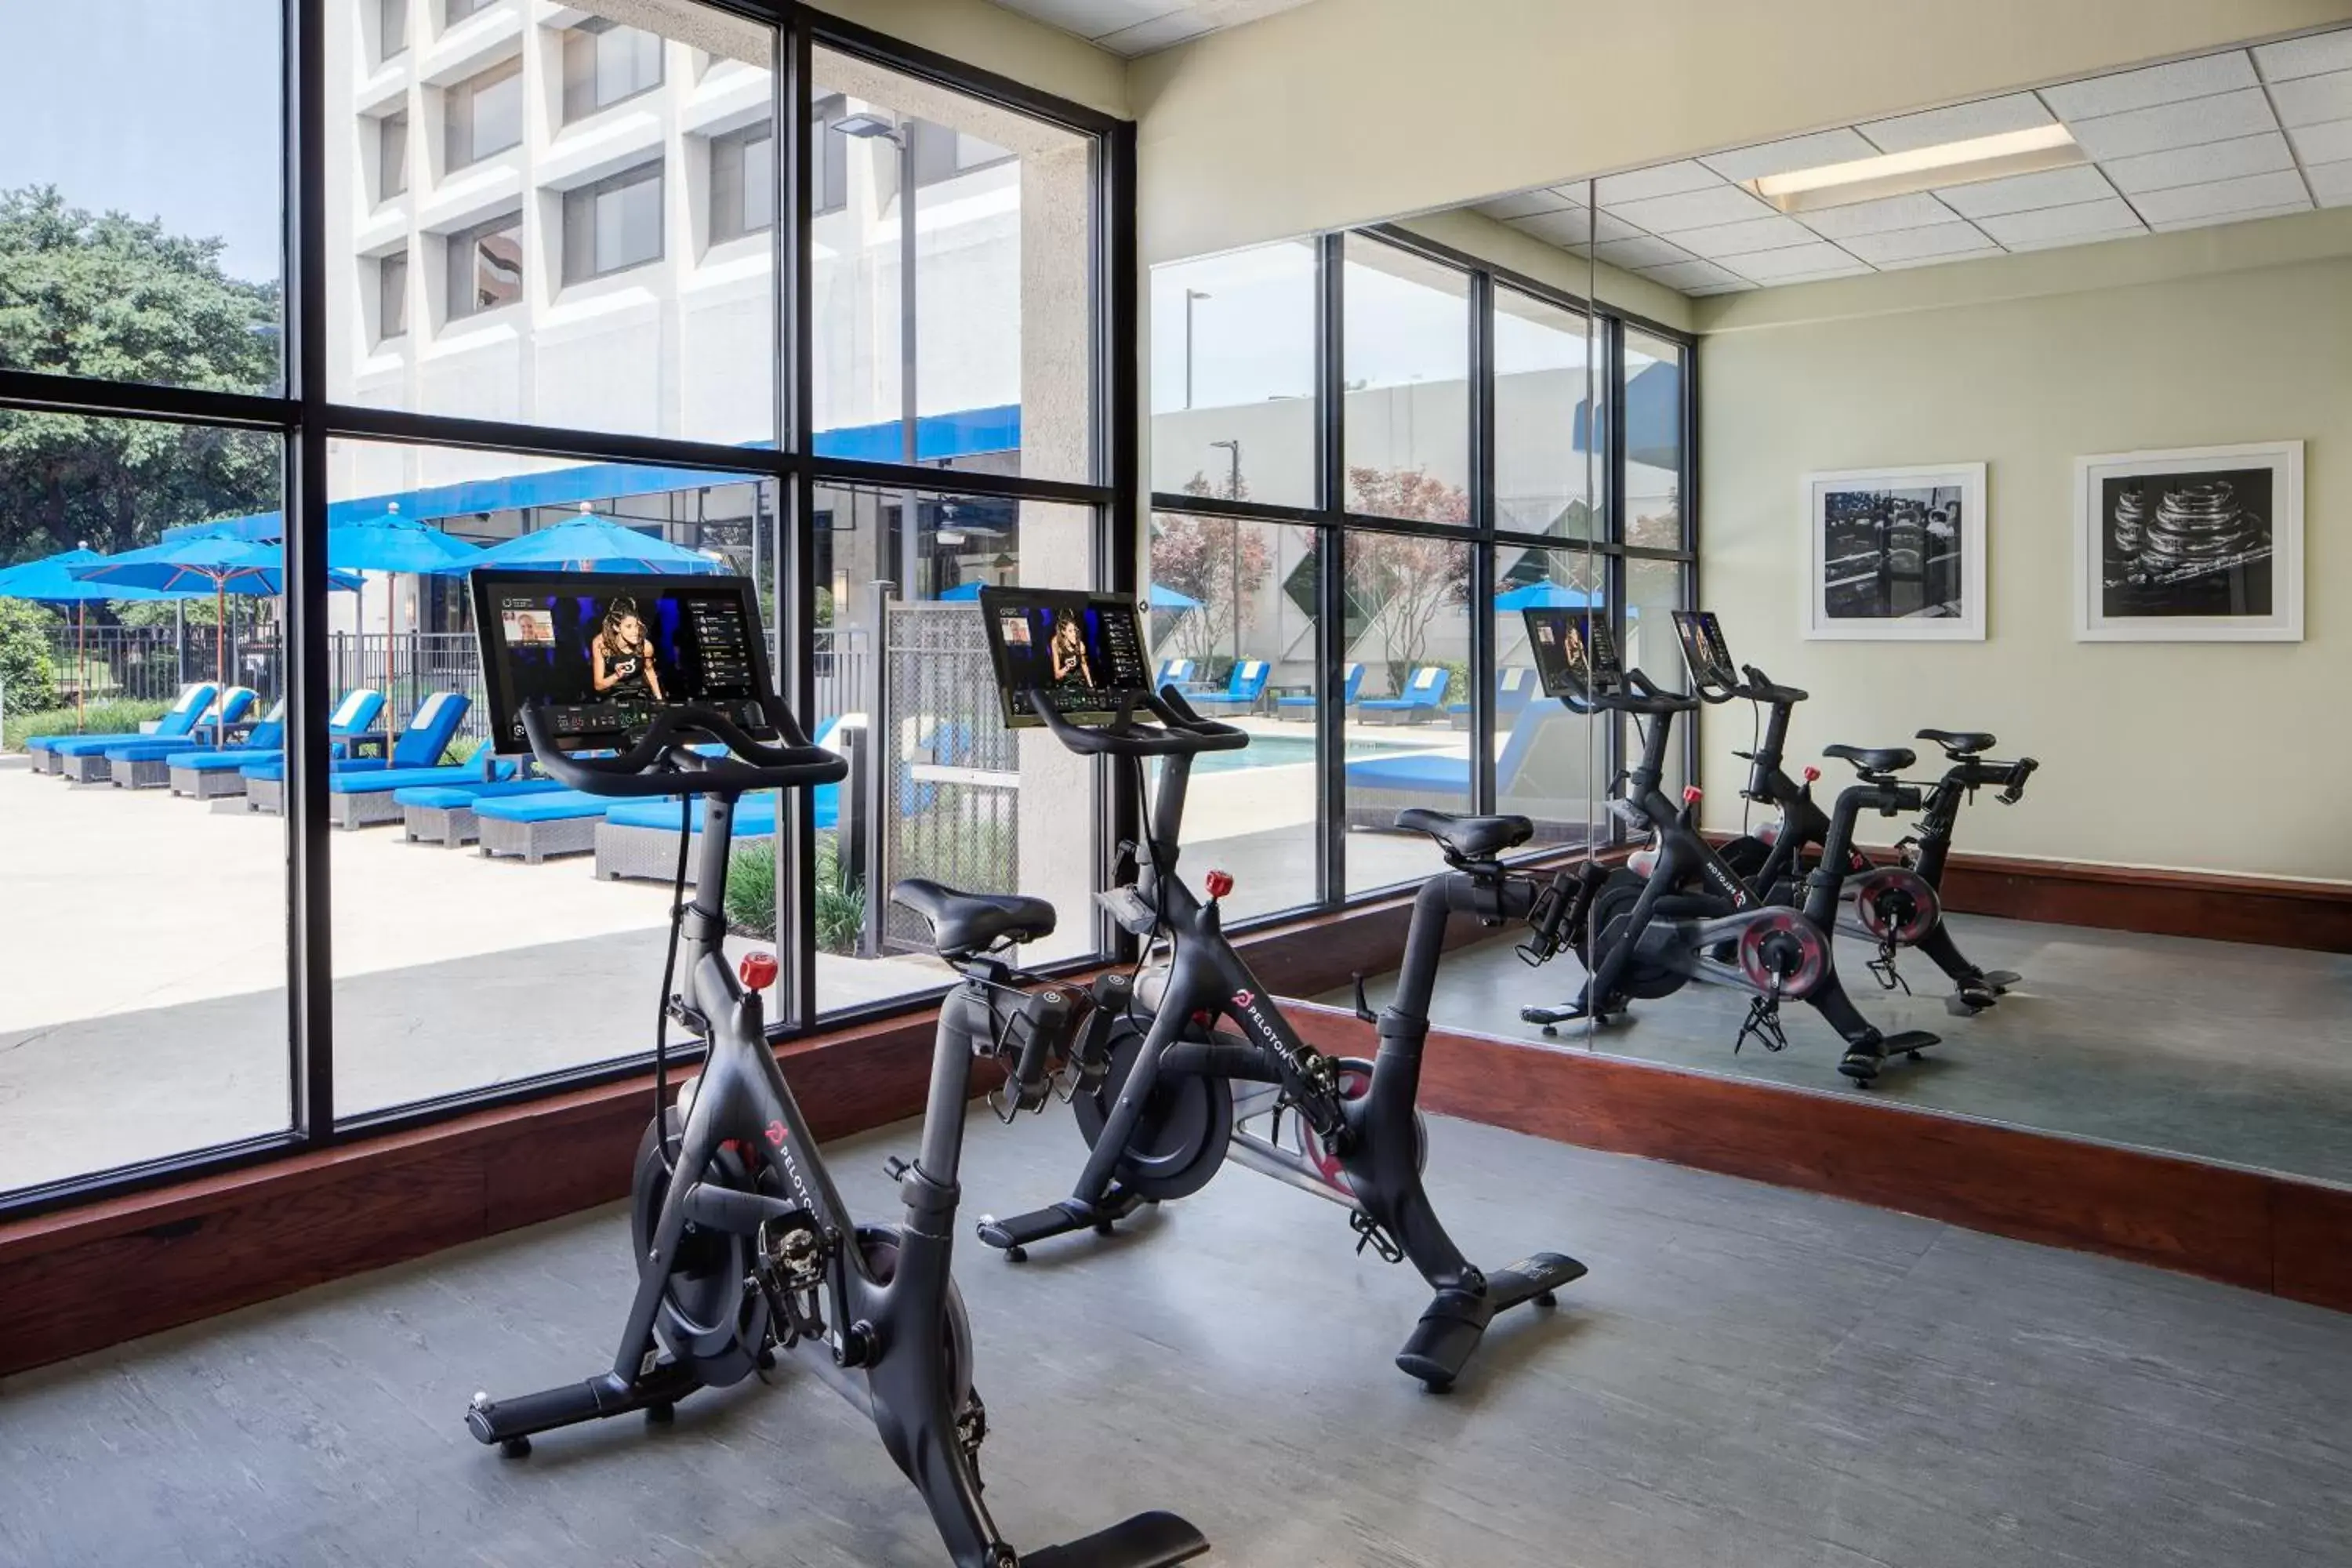 Fitness centre/facilities, Fitness Center/Facilities in Dallas-Addison Marriott Quorum by the Galleria